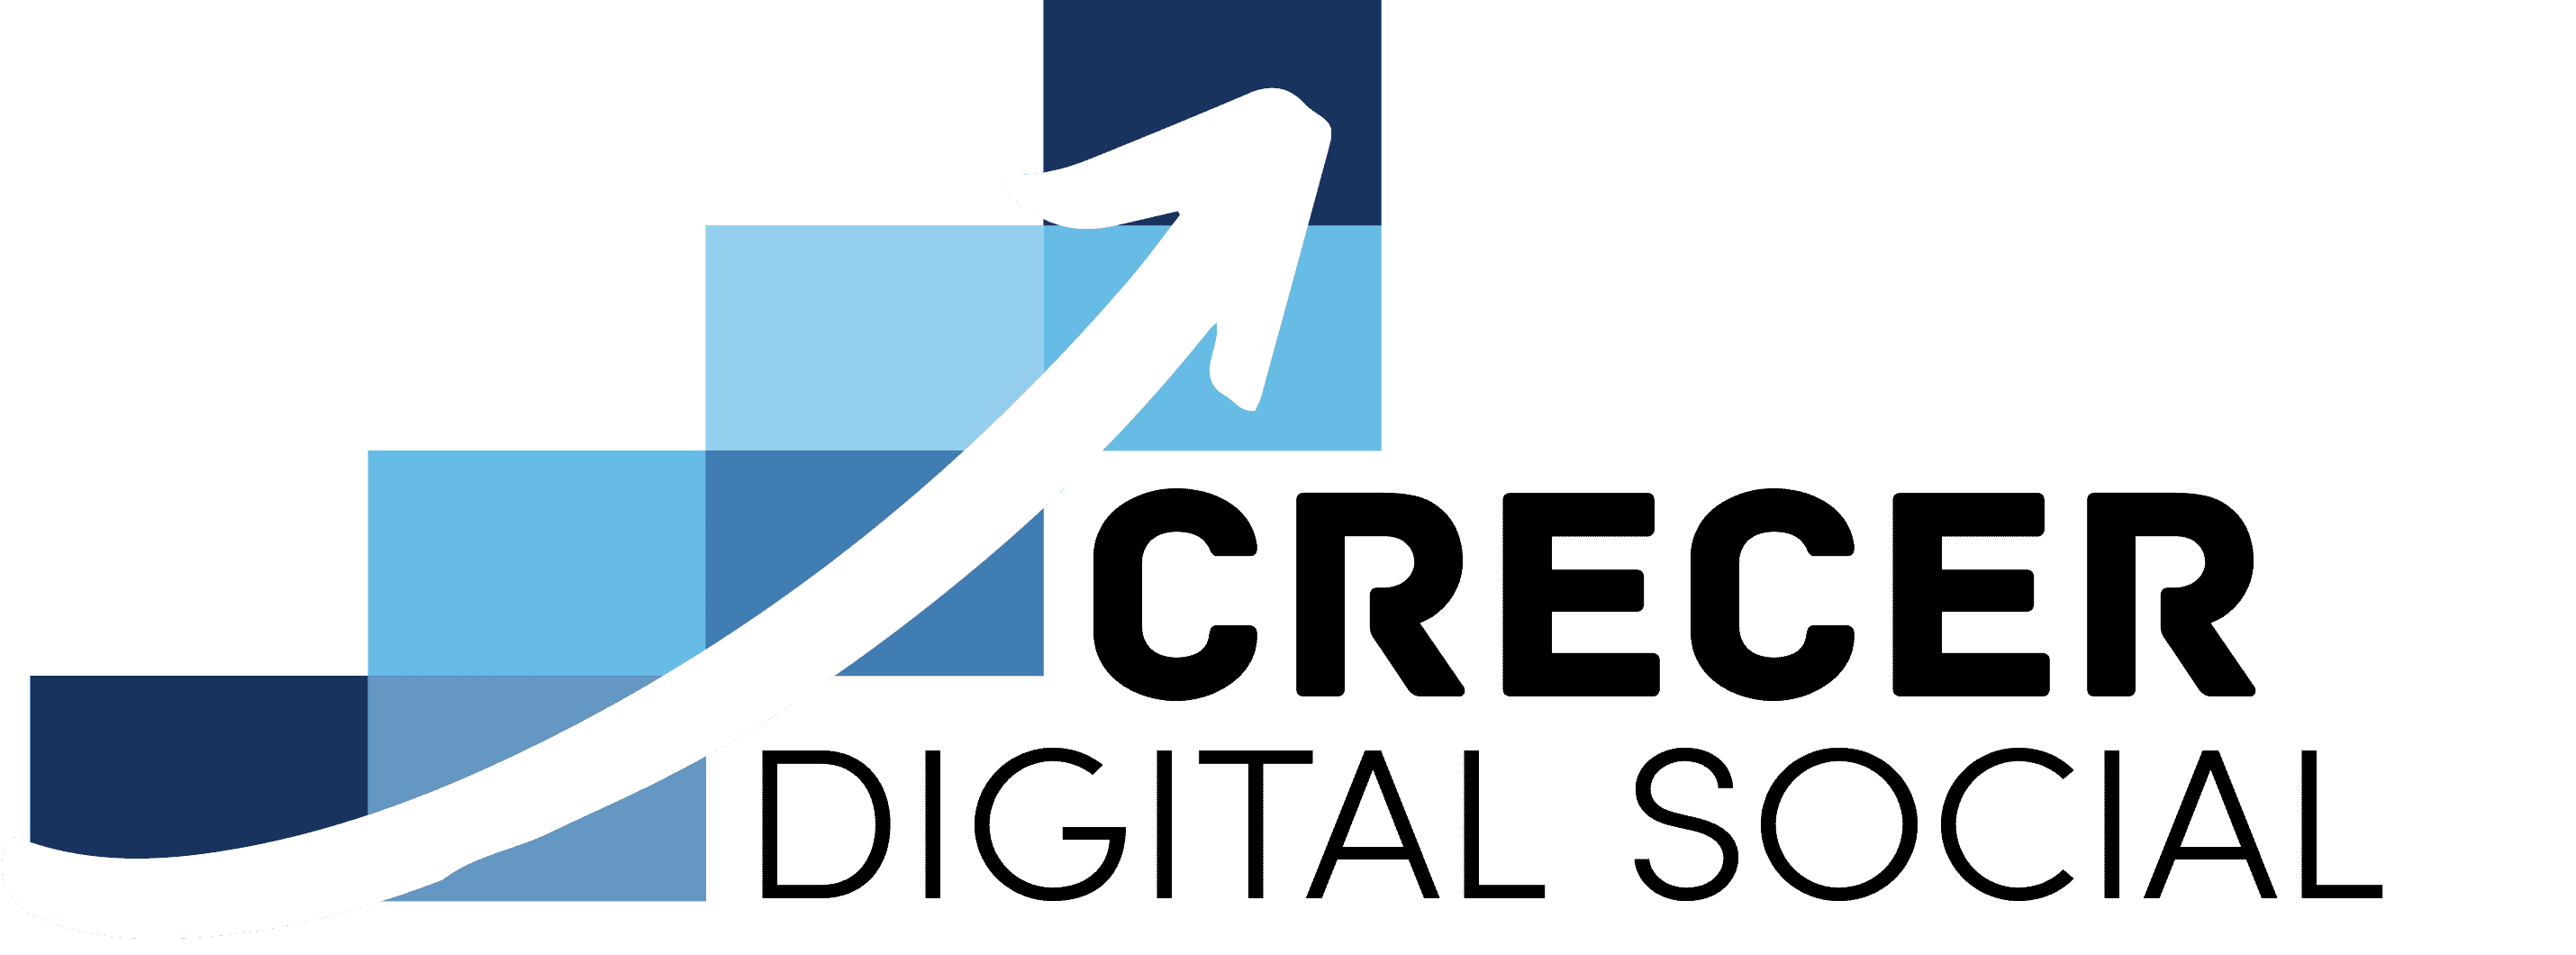 Crecer Digital Social Vertical Logo